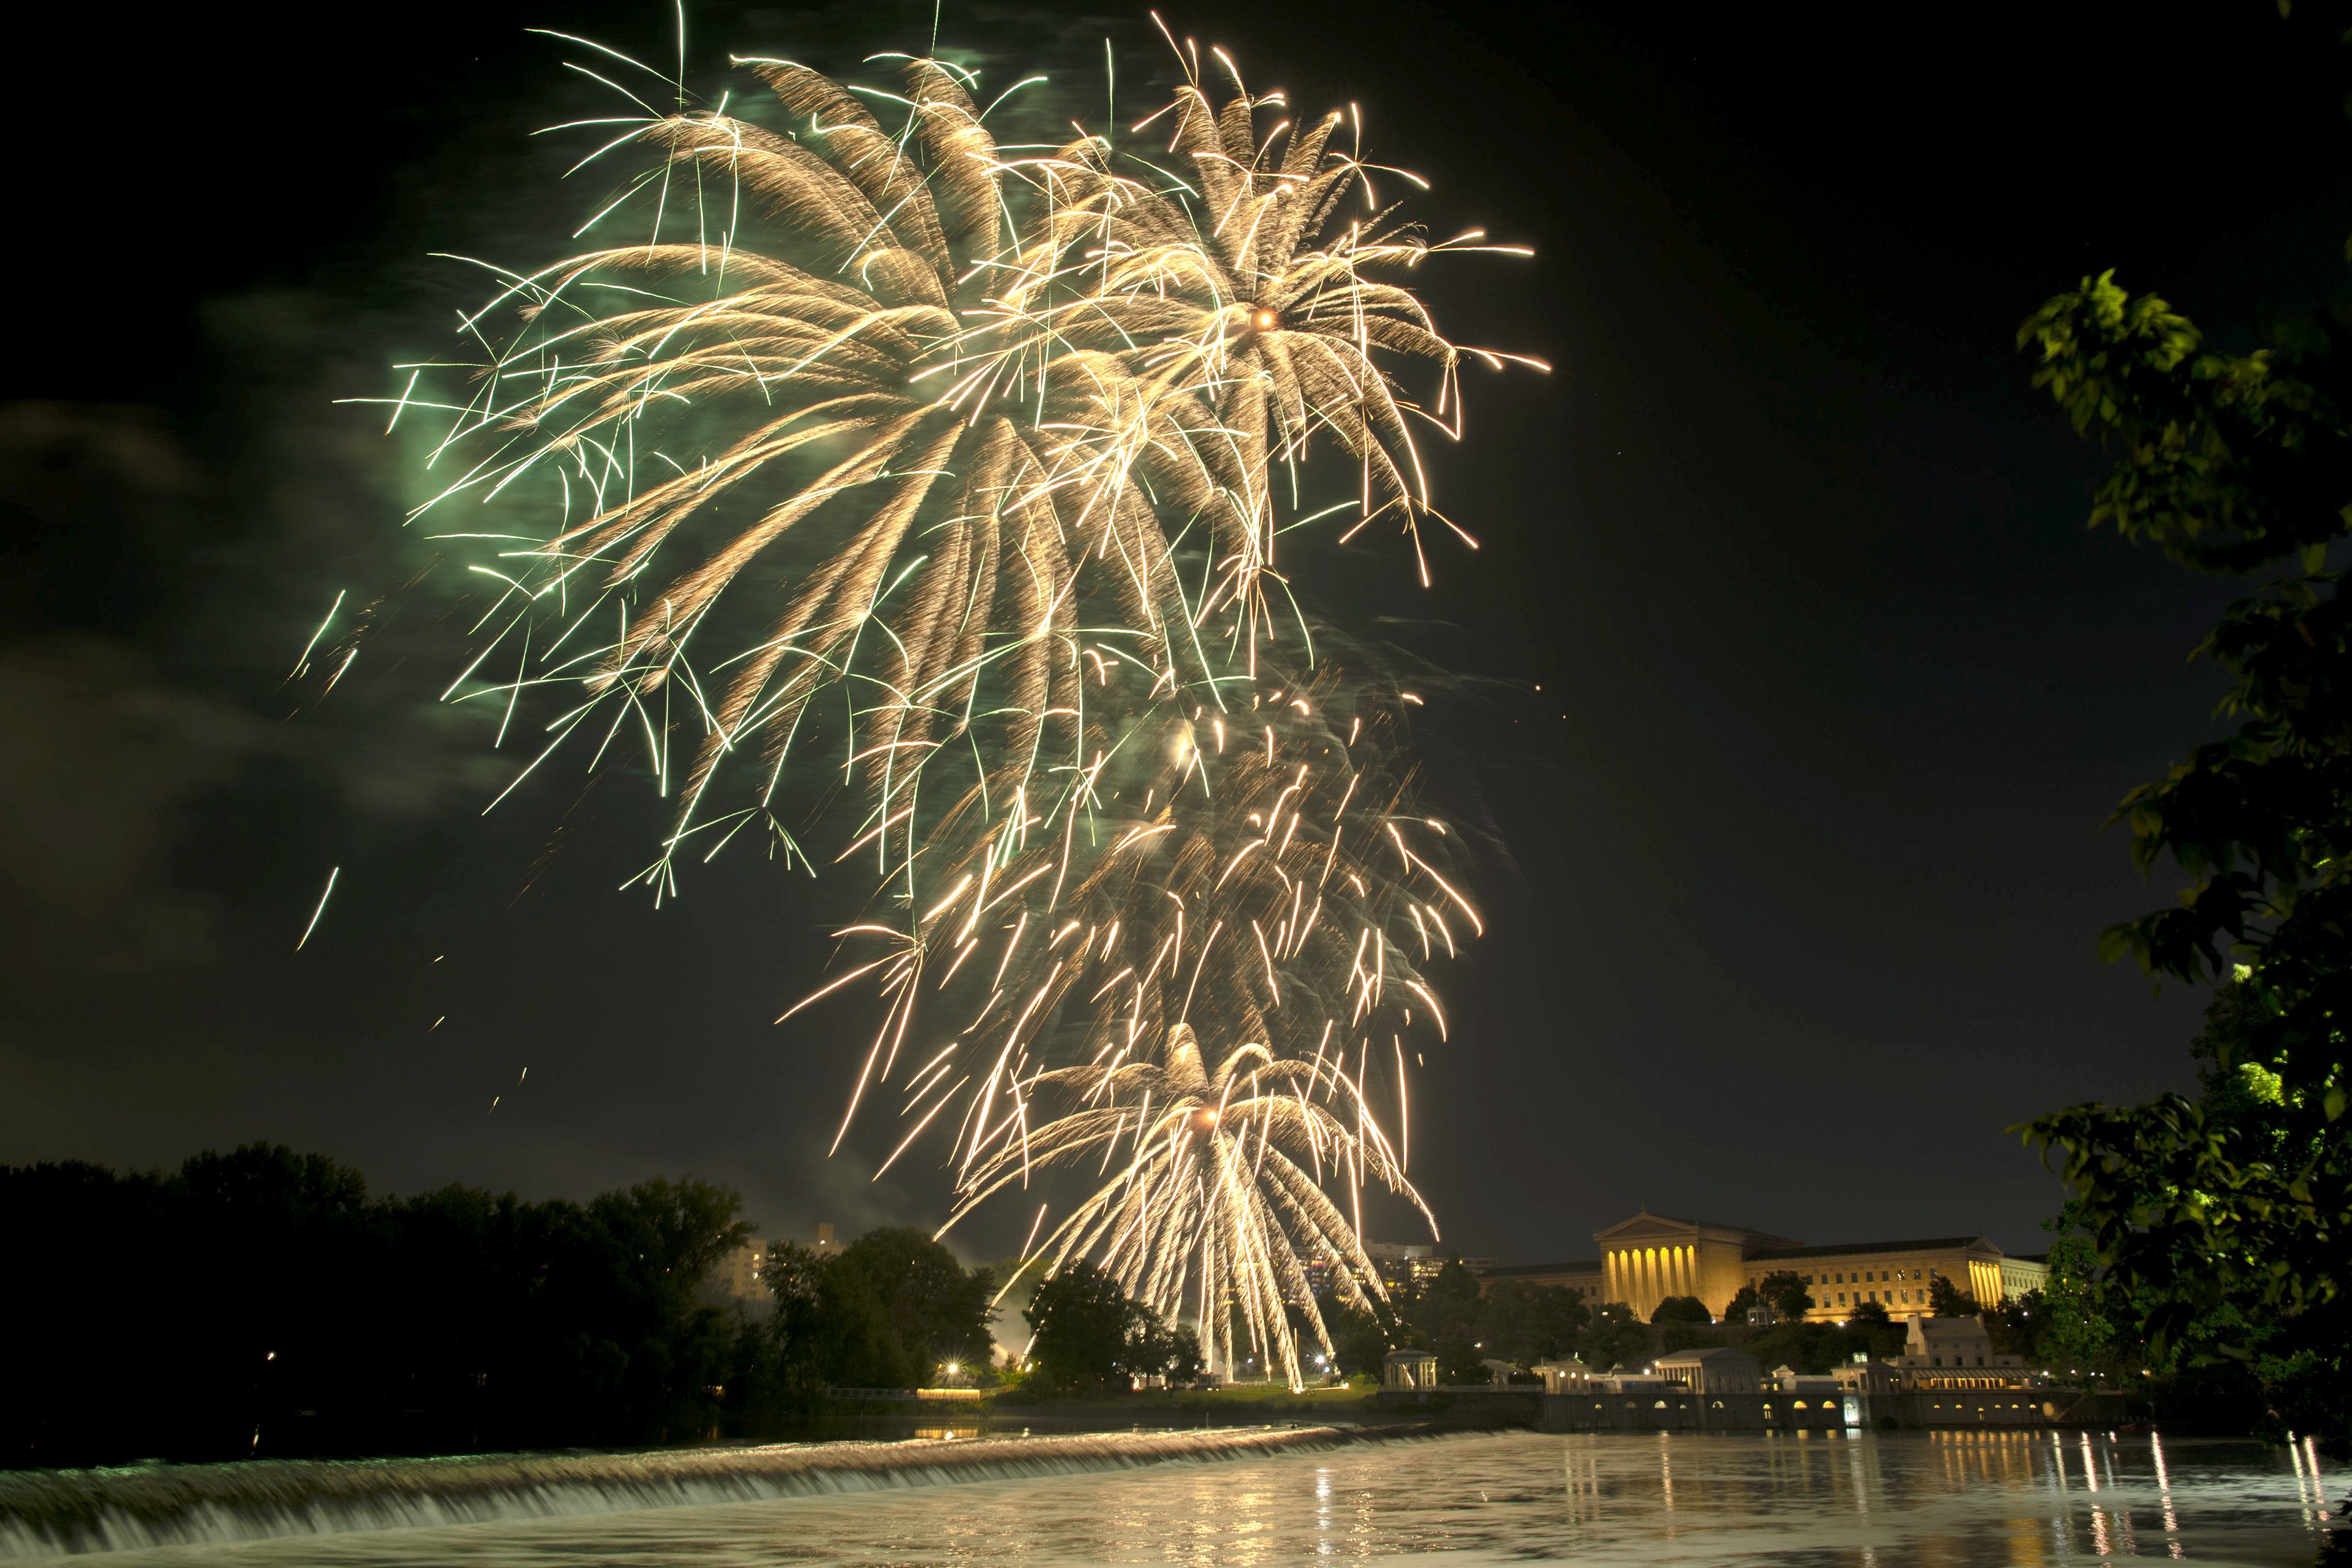  Independence Day fireworks erupt over the Philadelphia Art Museum on July 4, 2021 in Philadelphia, Pennsylvania. 